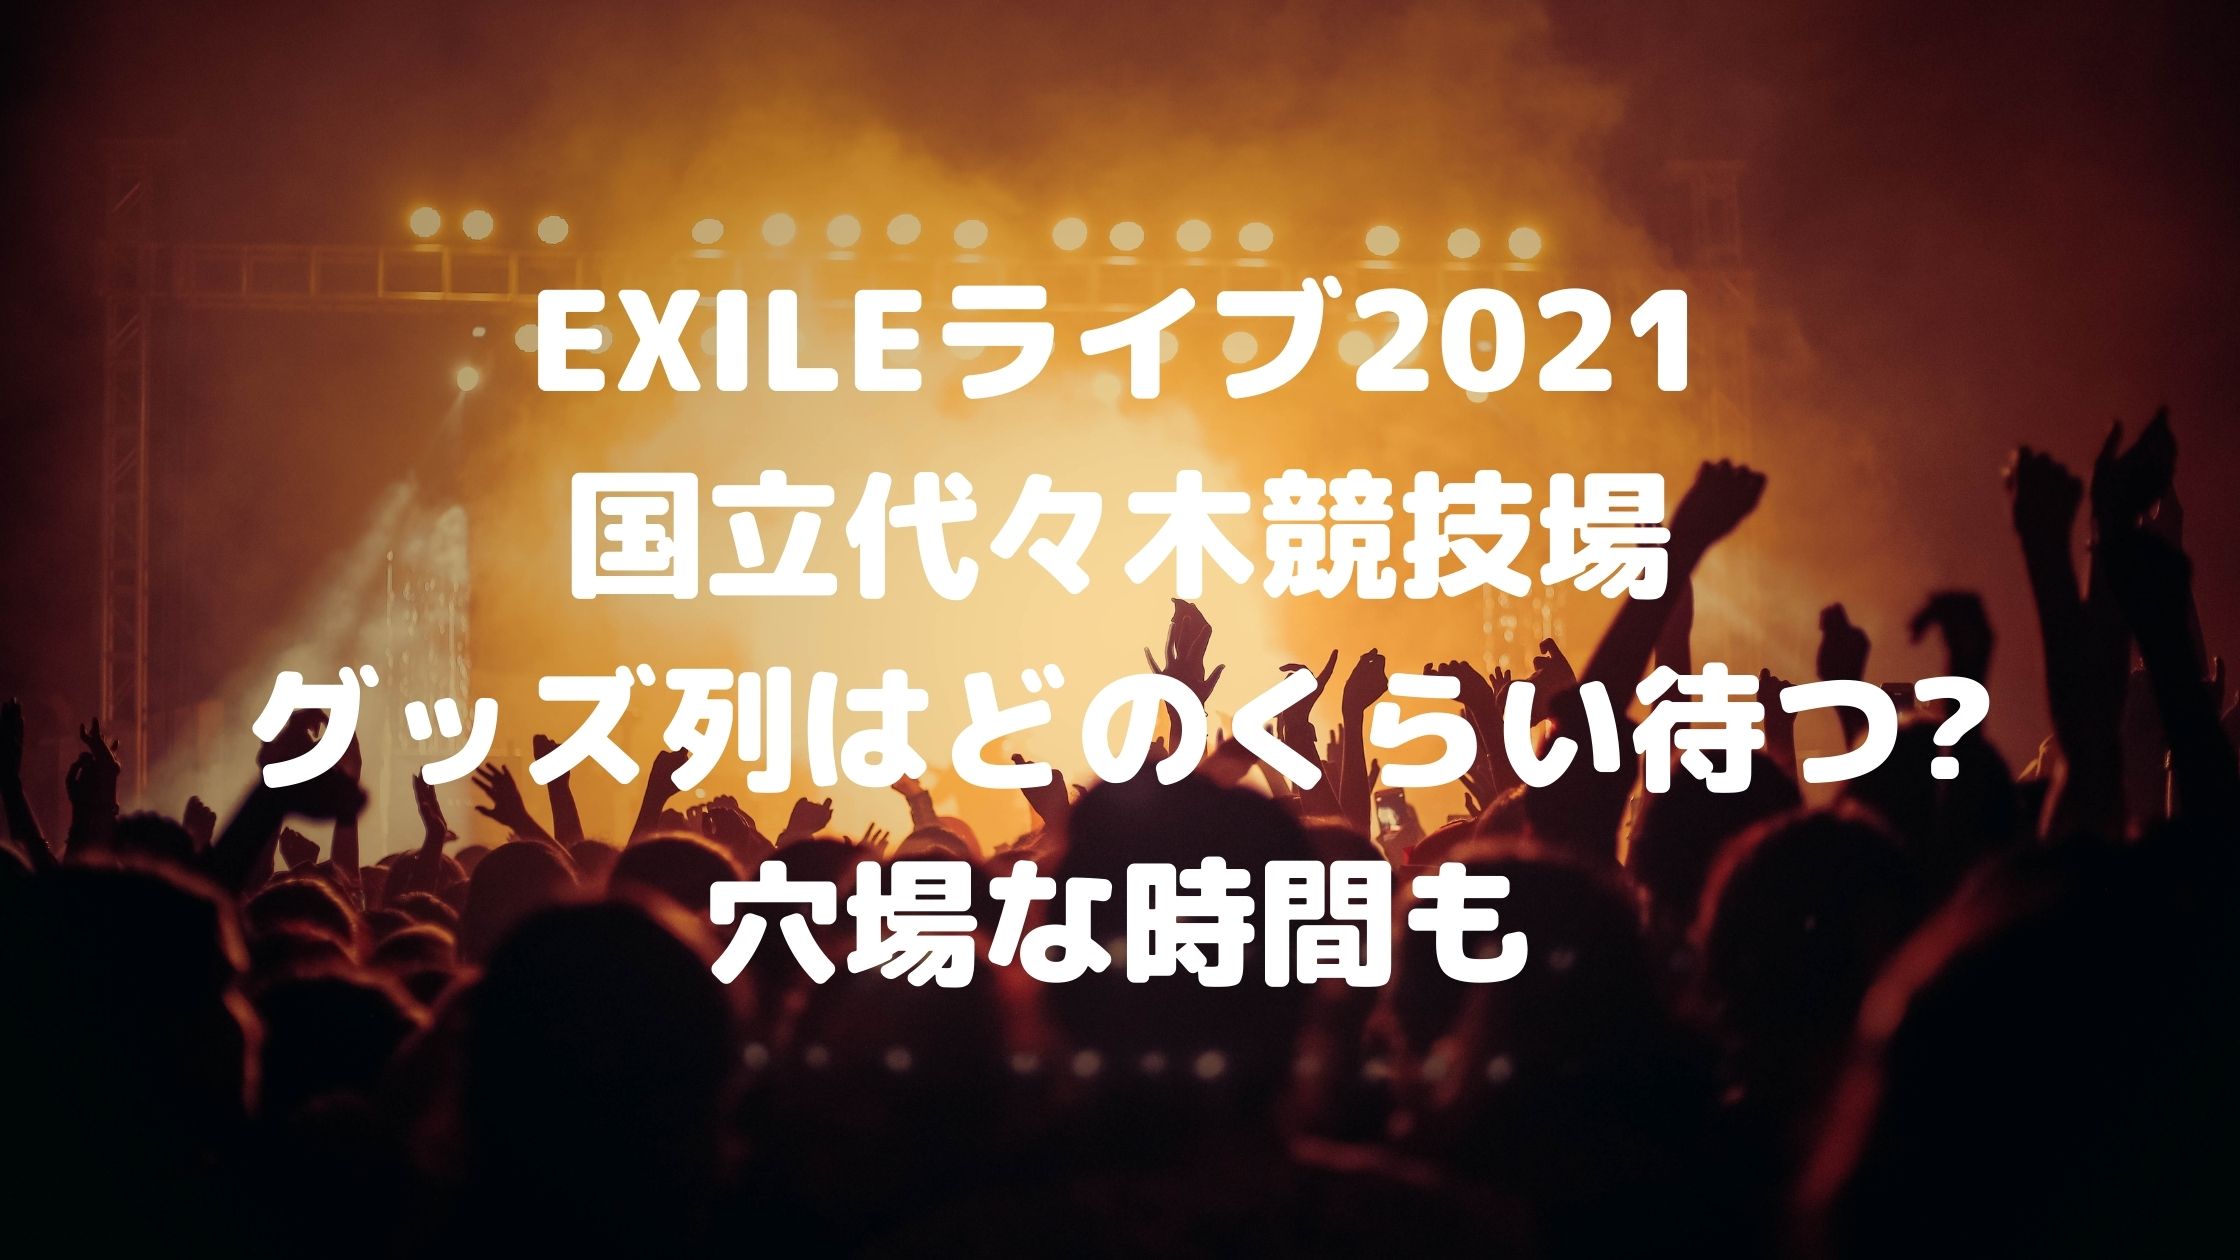 Exileライブ21国立代々木競技場 グッズ列はどのくらい待つ 穴場な時間も 混雑してる